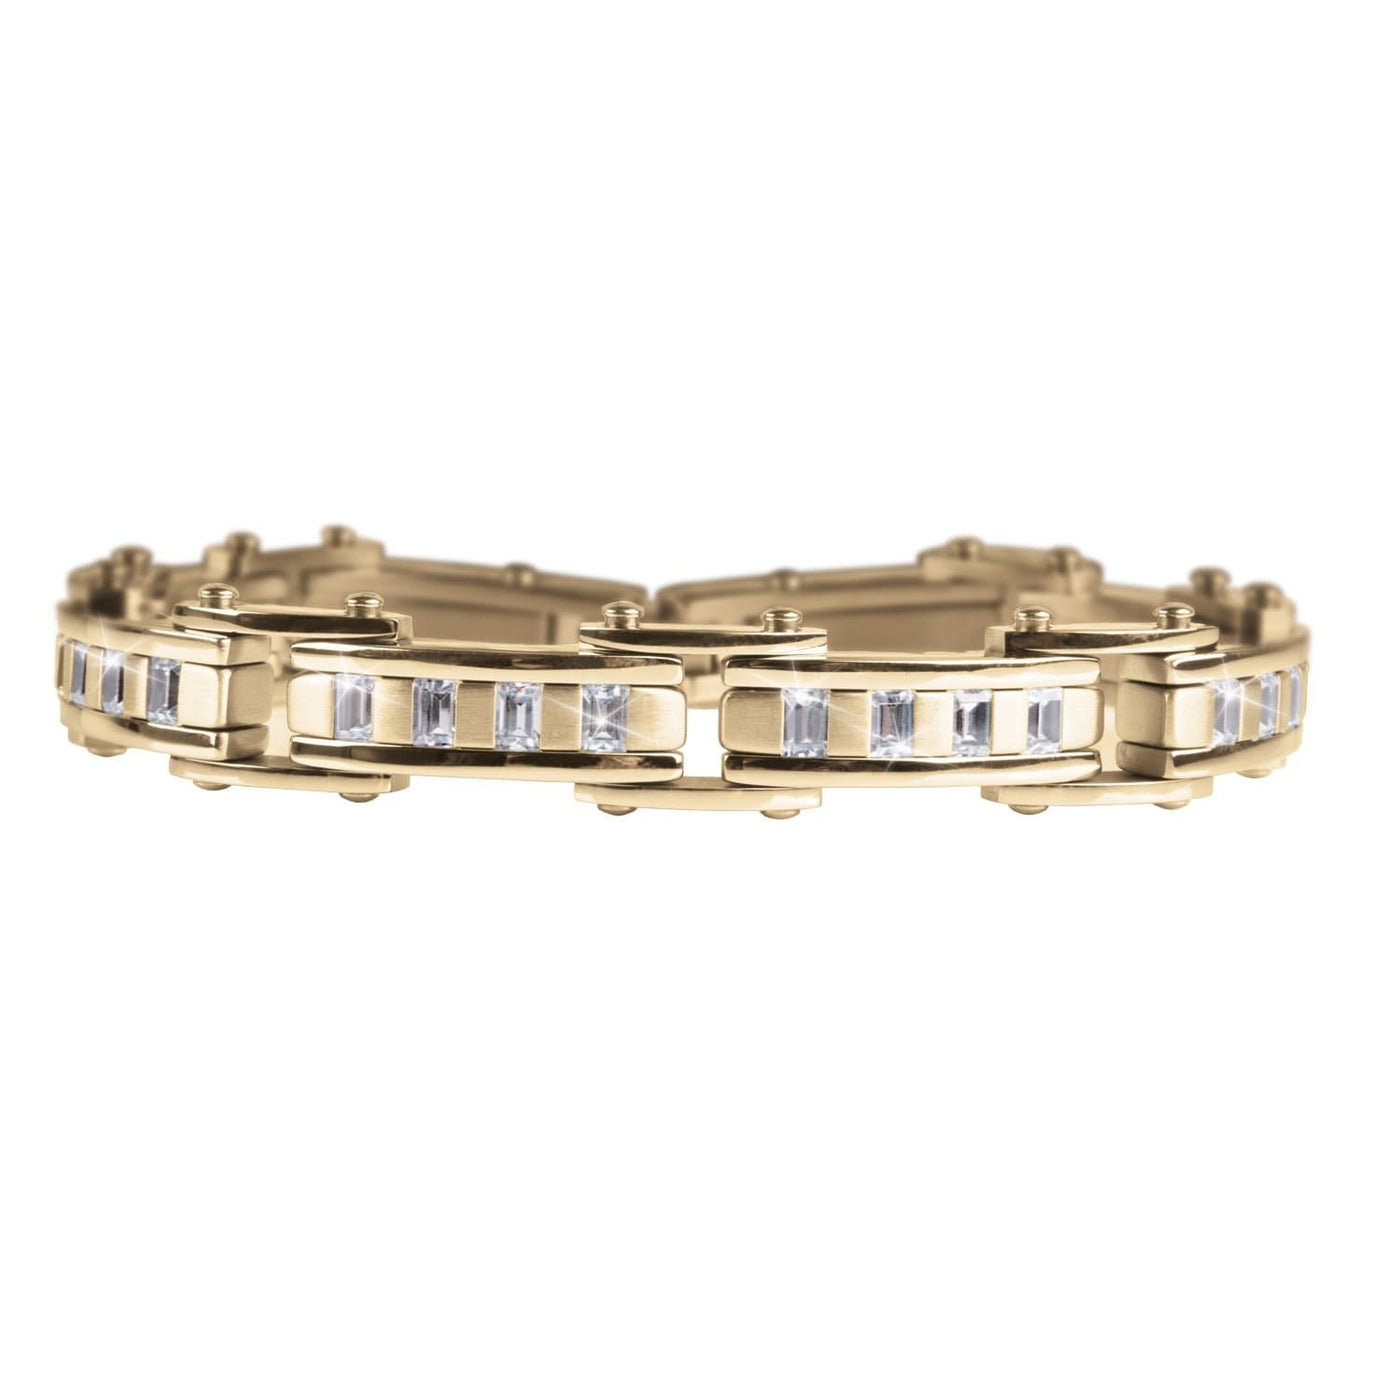 Daniel Steiger Affinity Men's Bracelet